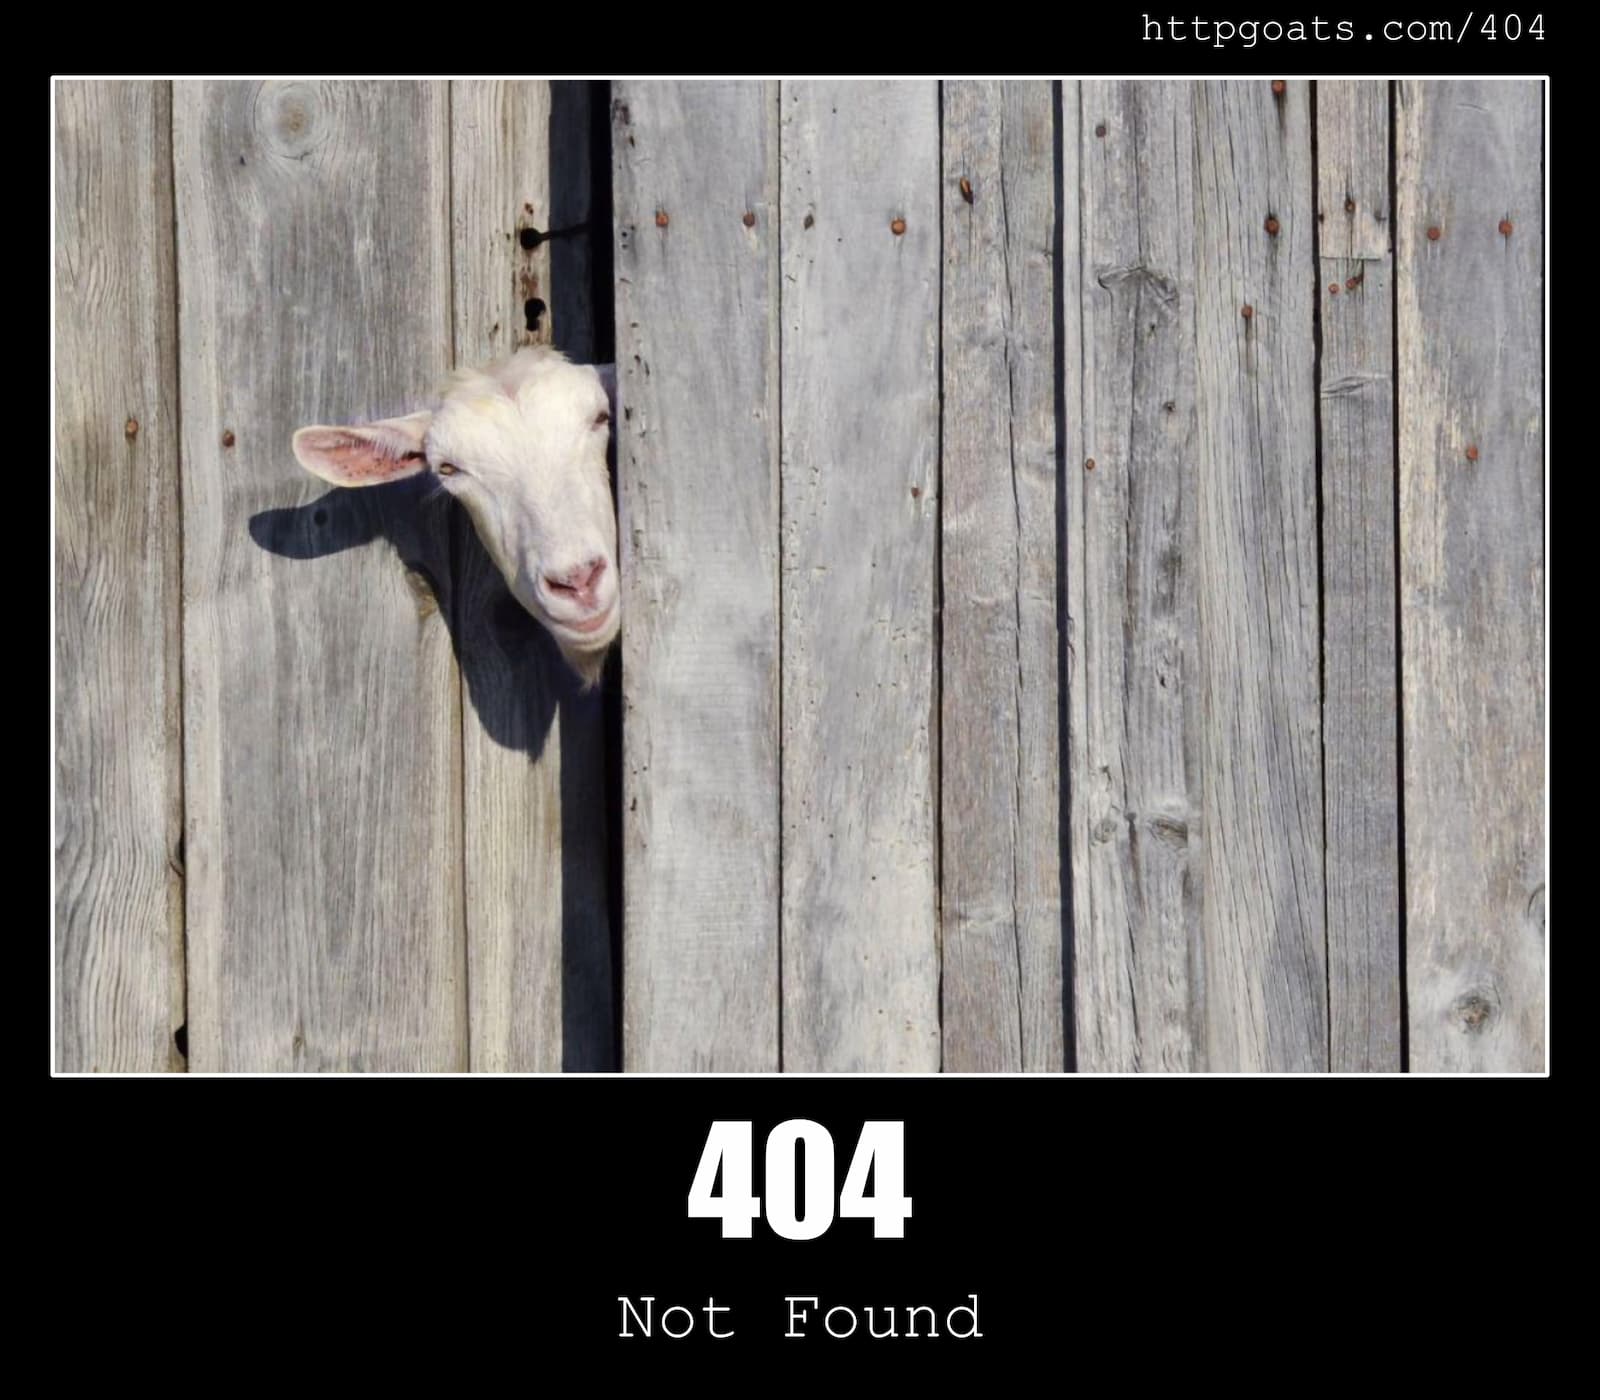 HTTP Status Code 404 Not Found & Goats